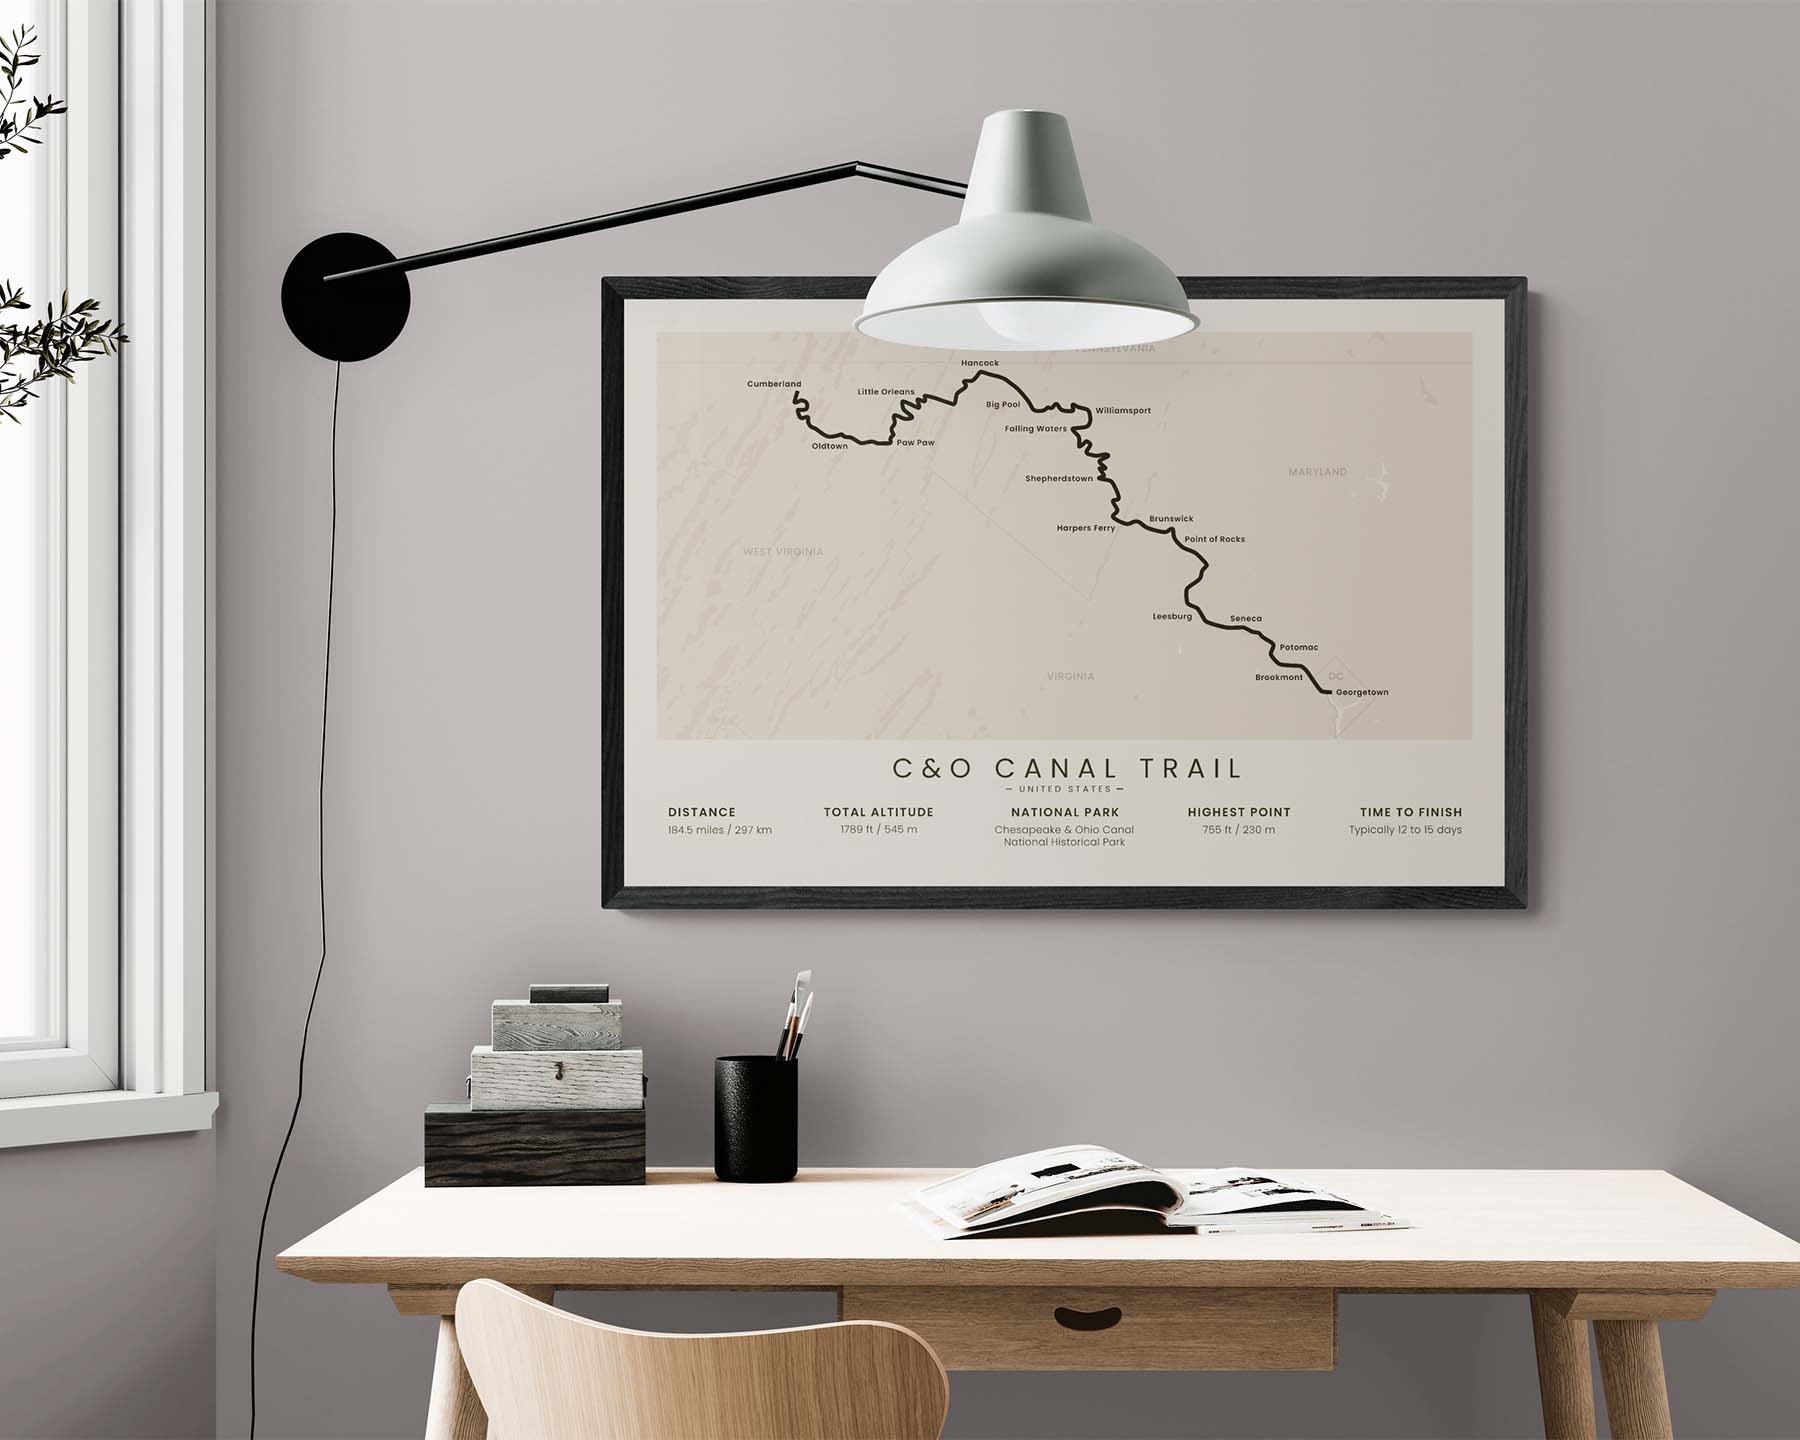 Chesapeake and Ohio Canal Trail (Potomac River) Thru-Hike Map Art in Minimal Room Decor